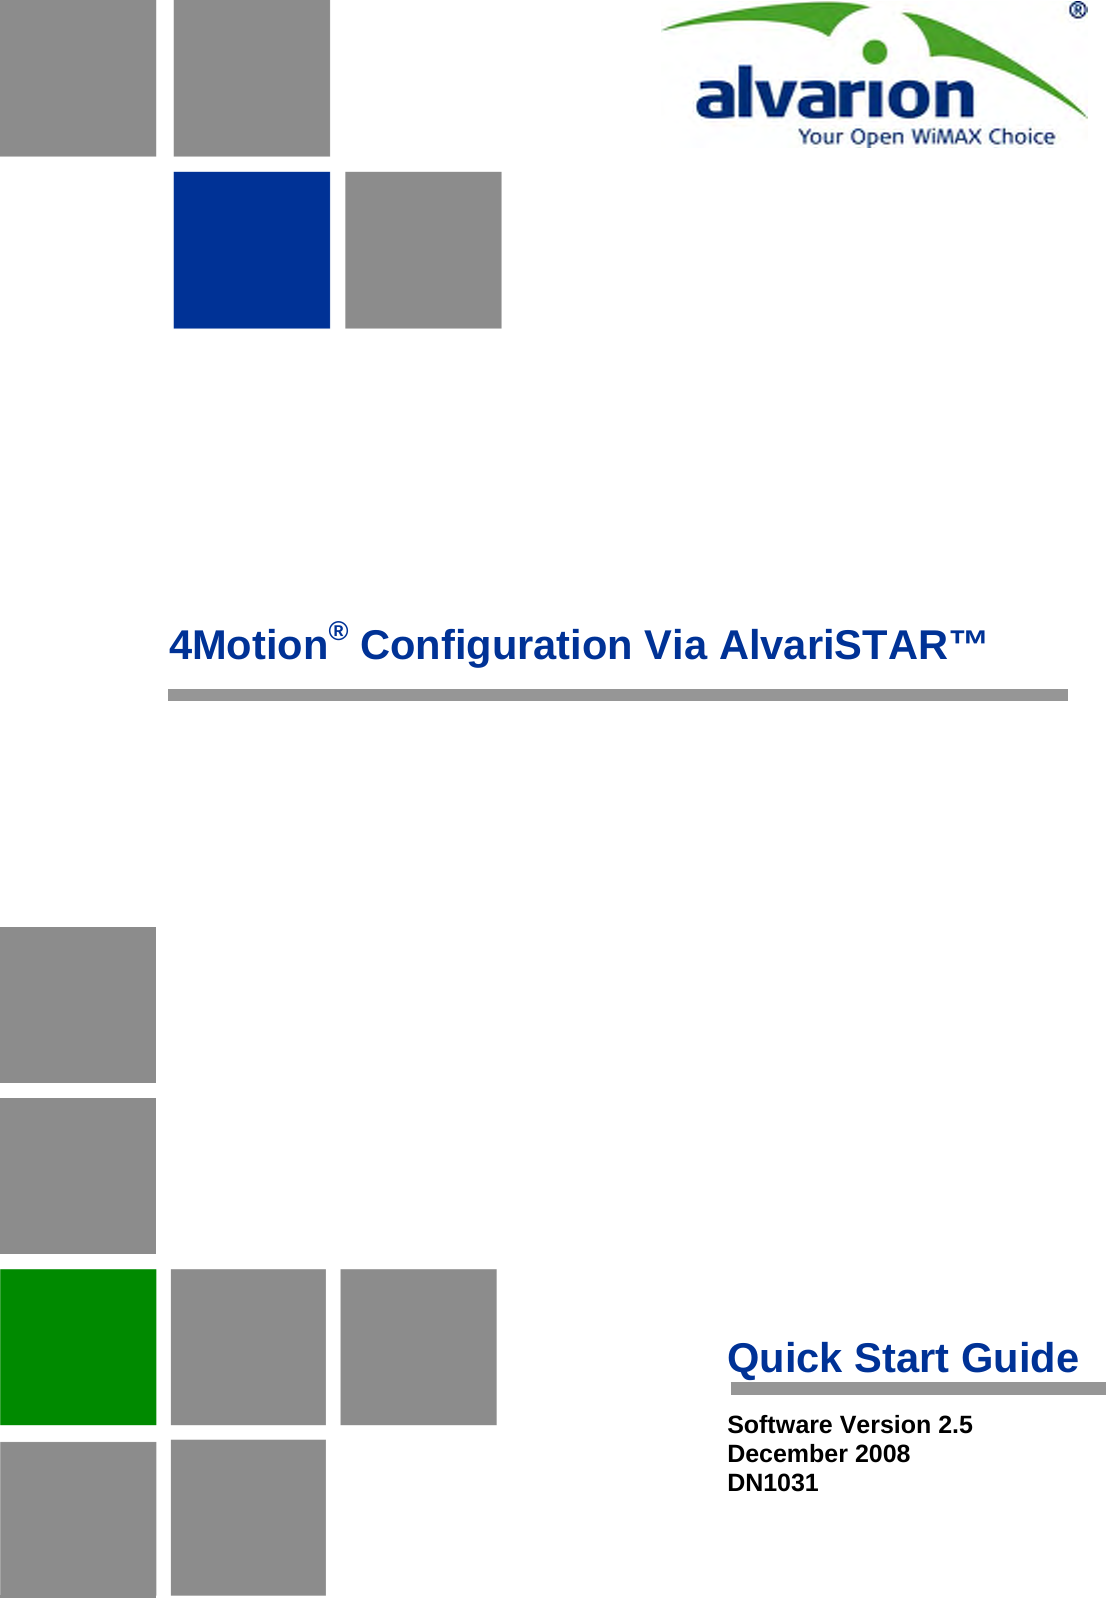  4Motion® Configuration Via AlvariSTAR™ Quick Start Guide  Software Version 2.5 December 2008 DN1031 